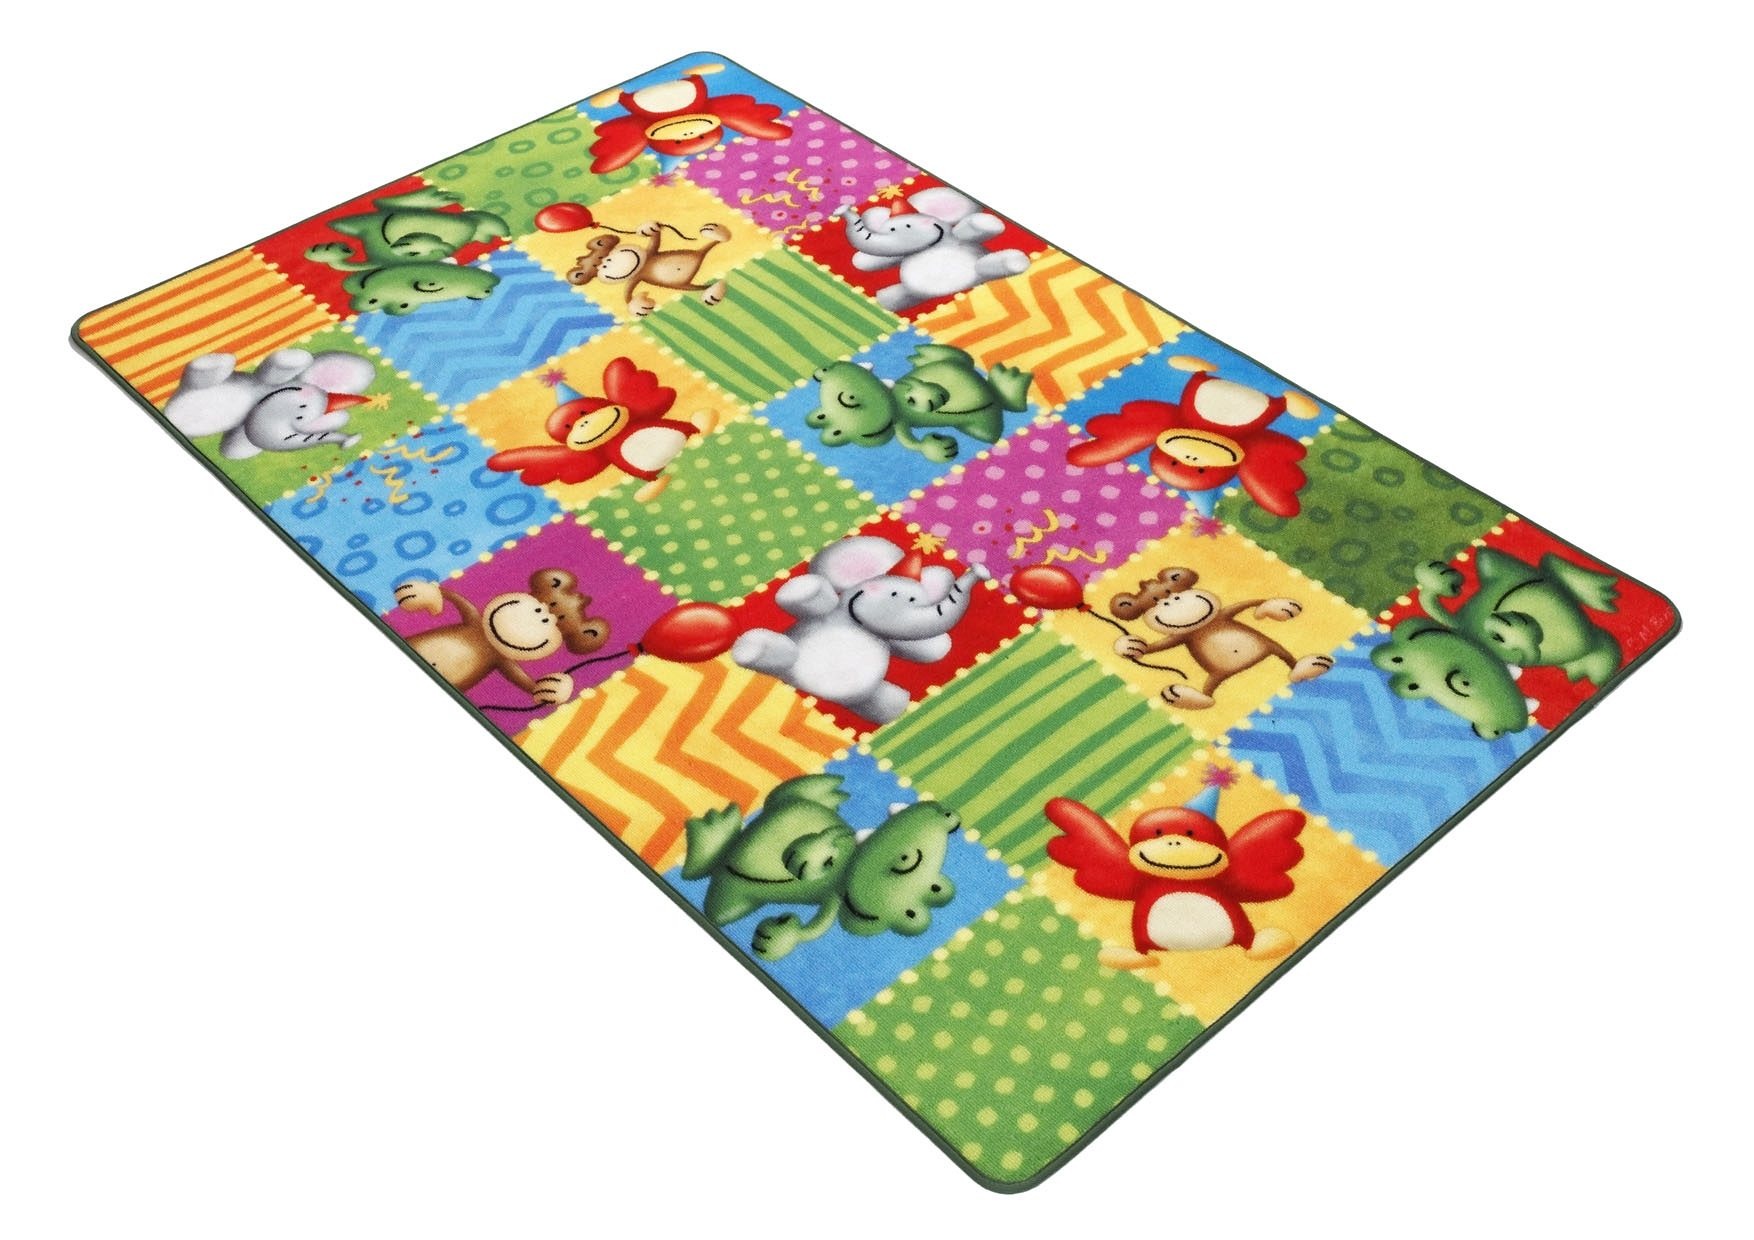 Böing Carpet Fußmatte Kids Motiv Druckteppich, Kinderzimmer Zootiere, Schmutzfangmatte, rechteckig, »Lovely LK-5«